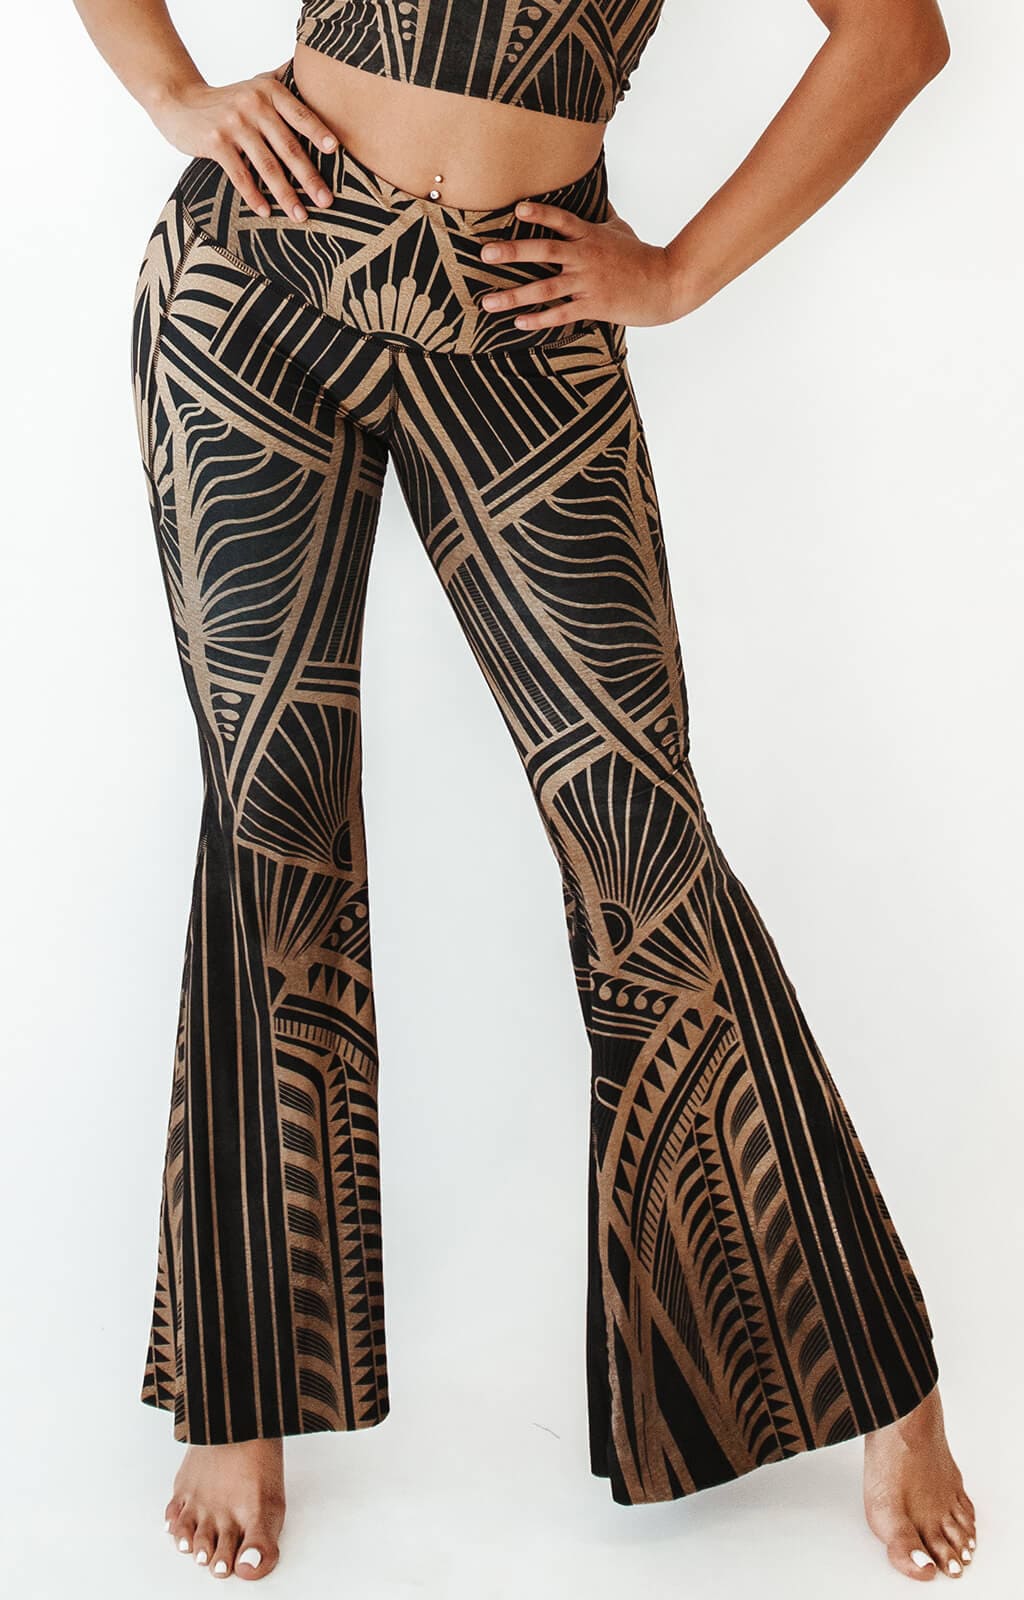 Boho Flare Pants Women Bohemian Fashion Loose Long Pant Tribal African Print  Large Size Trouser Bell Bottom Legging Hippie Pants - AliExpress